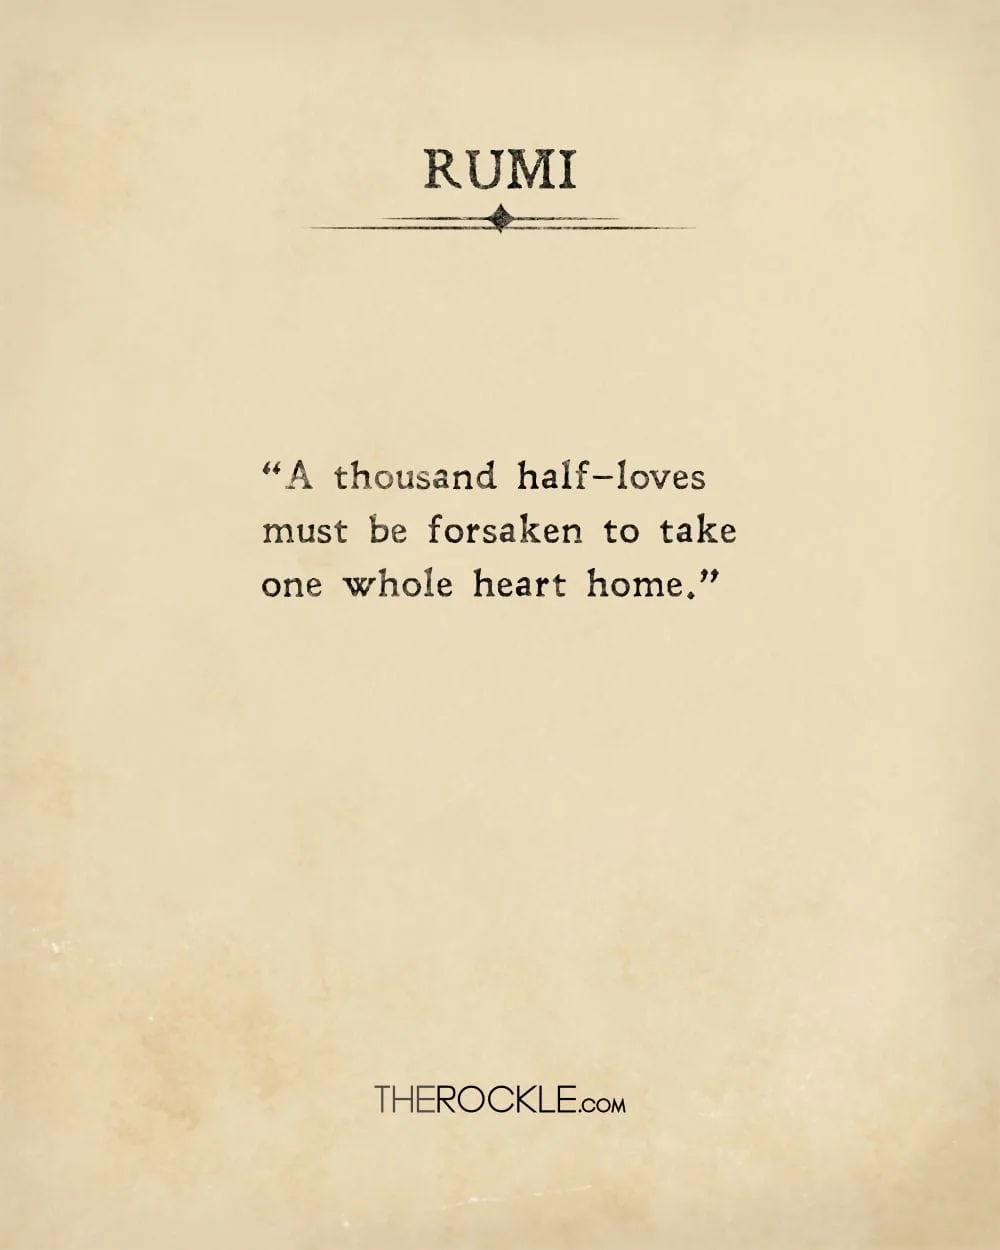 Rumi on prioritizing true love over shallow ones